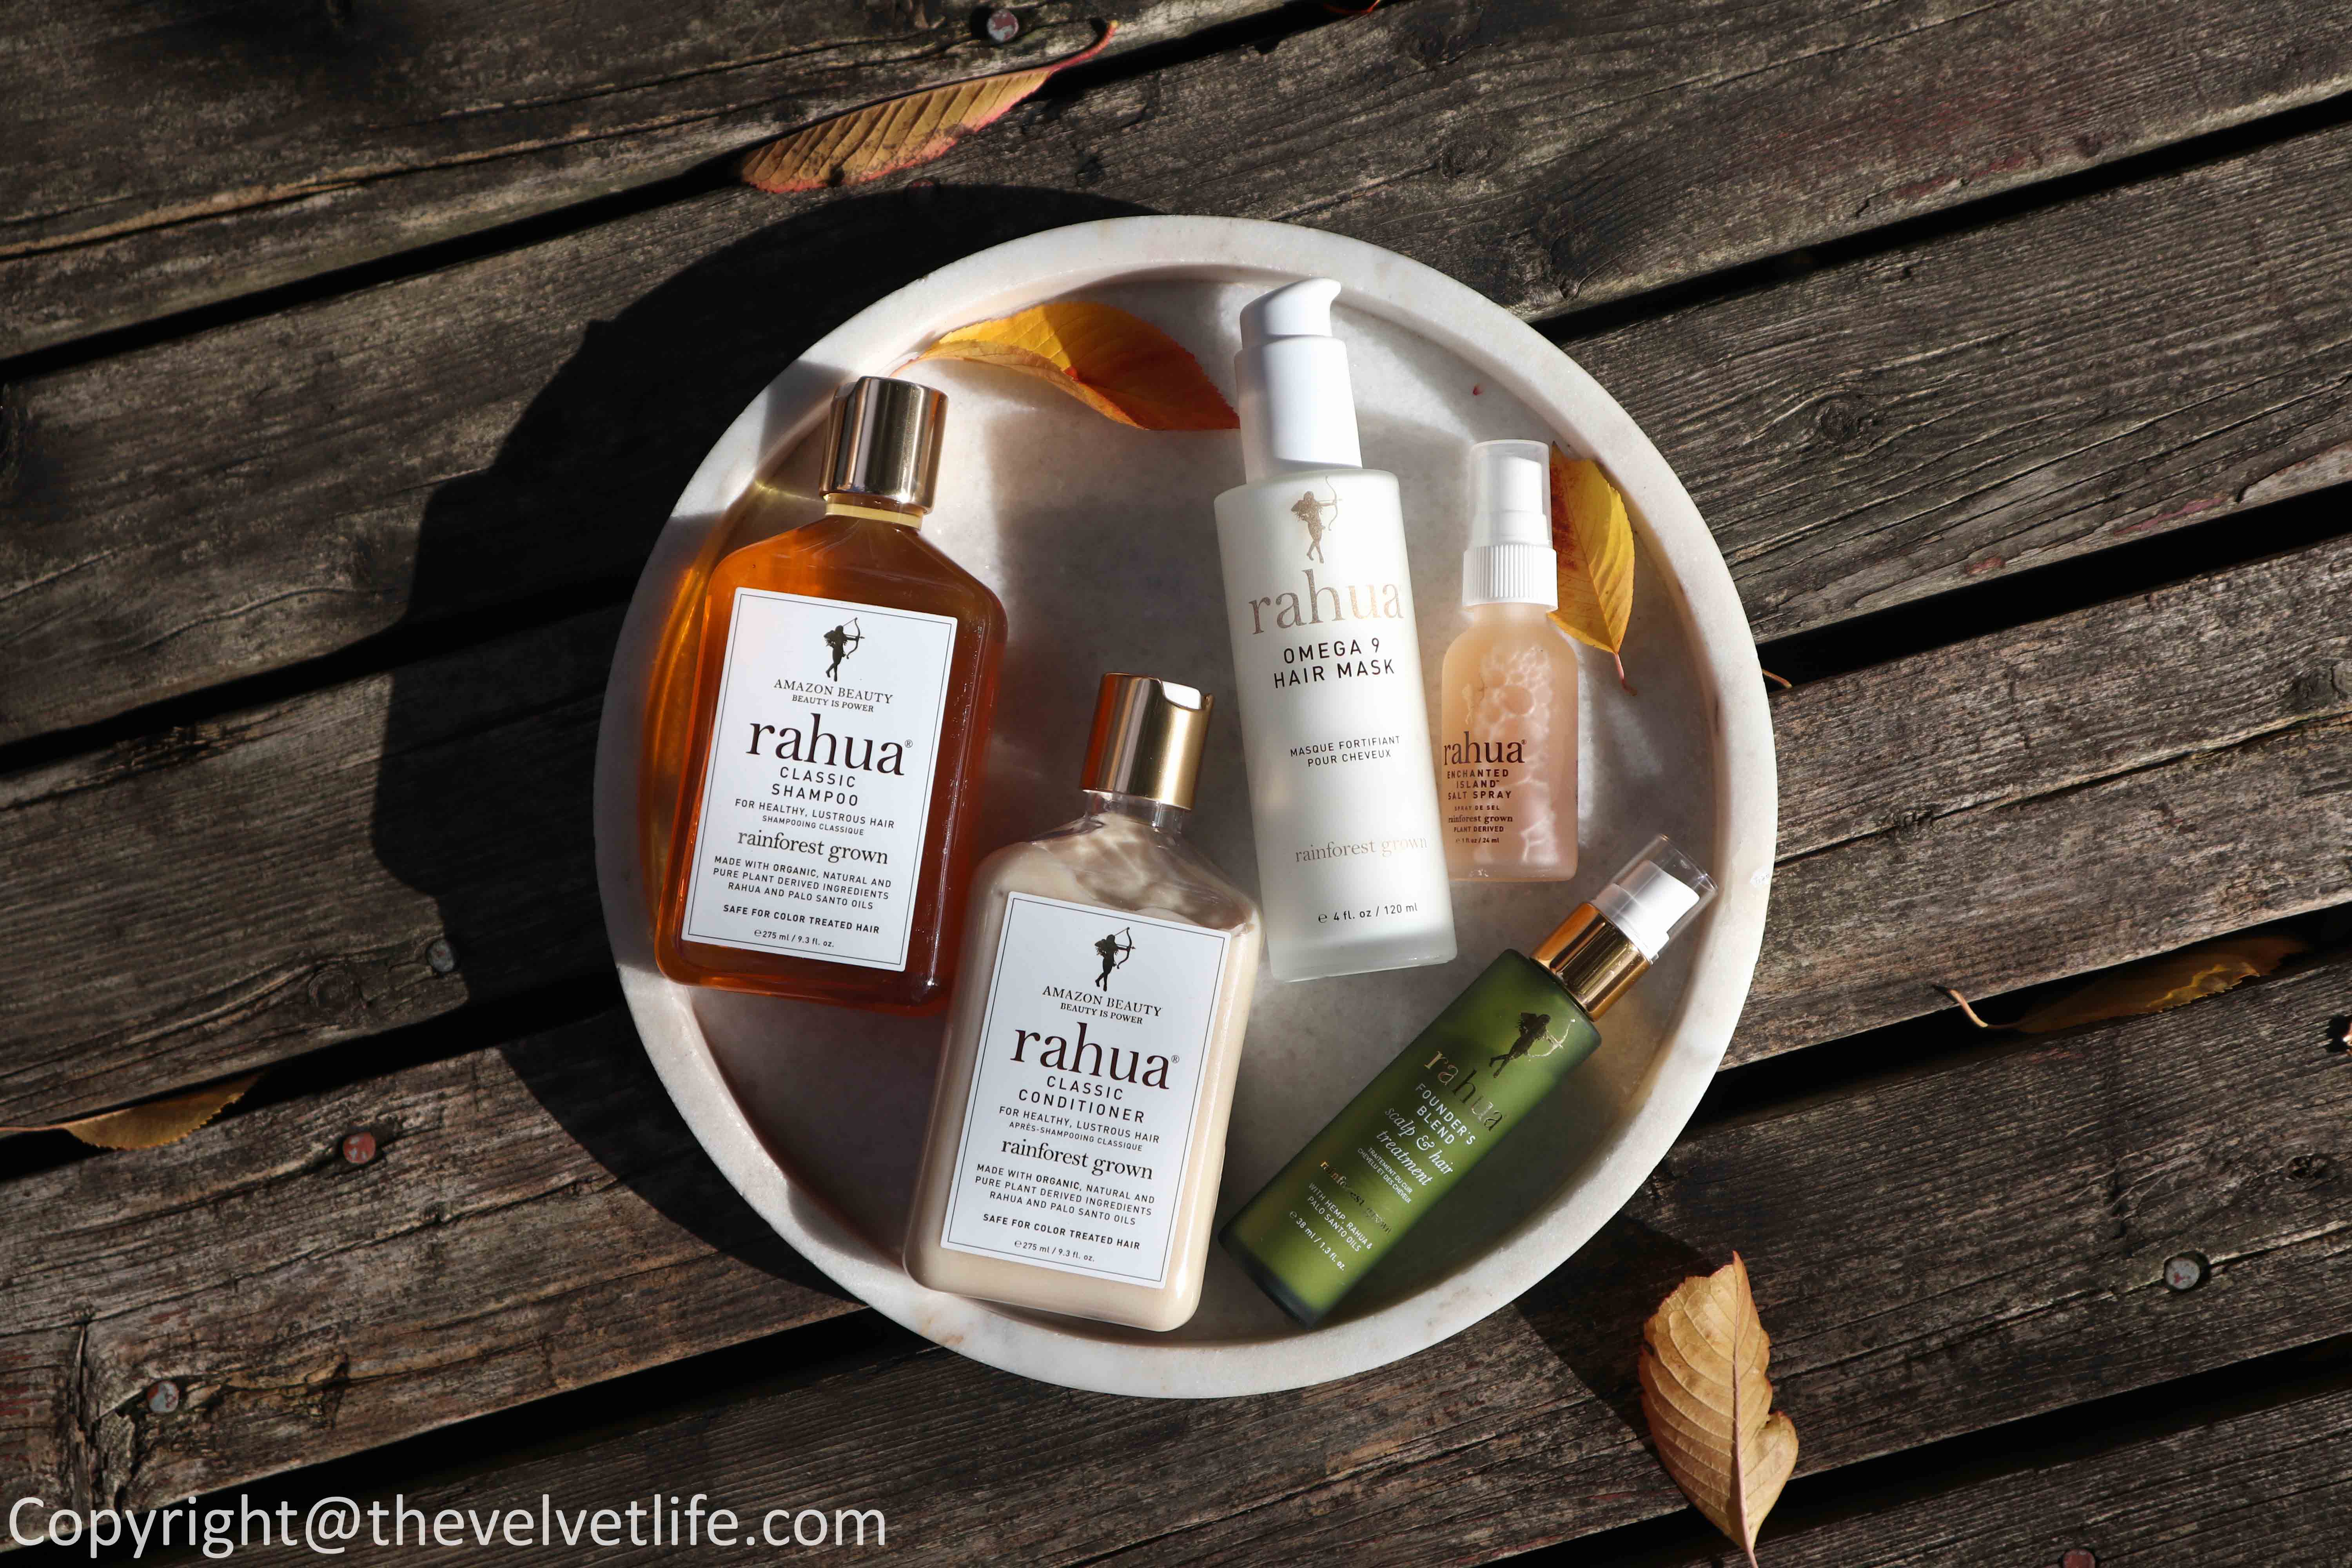 Rahua Classic Shampoo, Classic Conditioner review Rahua Founder's Blend, Omega 9 Hair Mask, and Enchanted Island Salt Spray